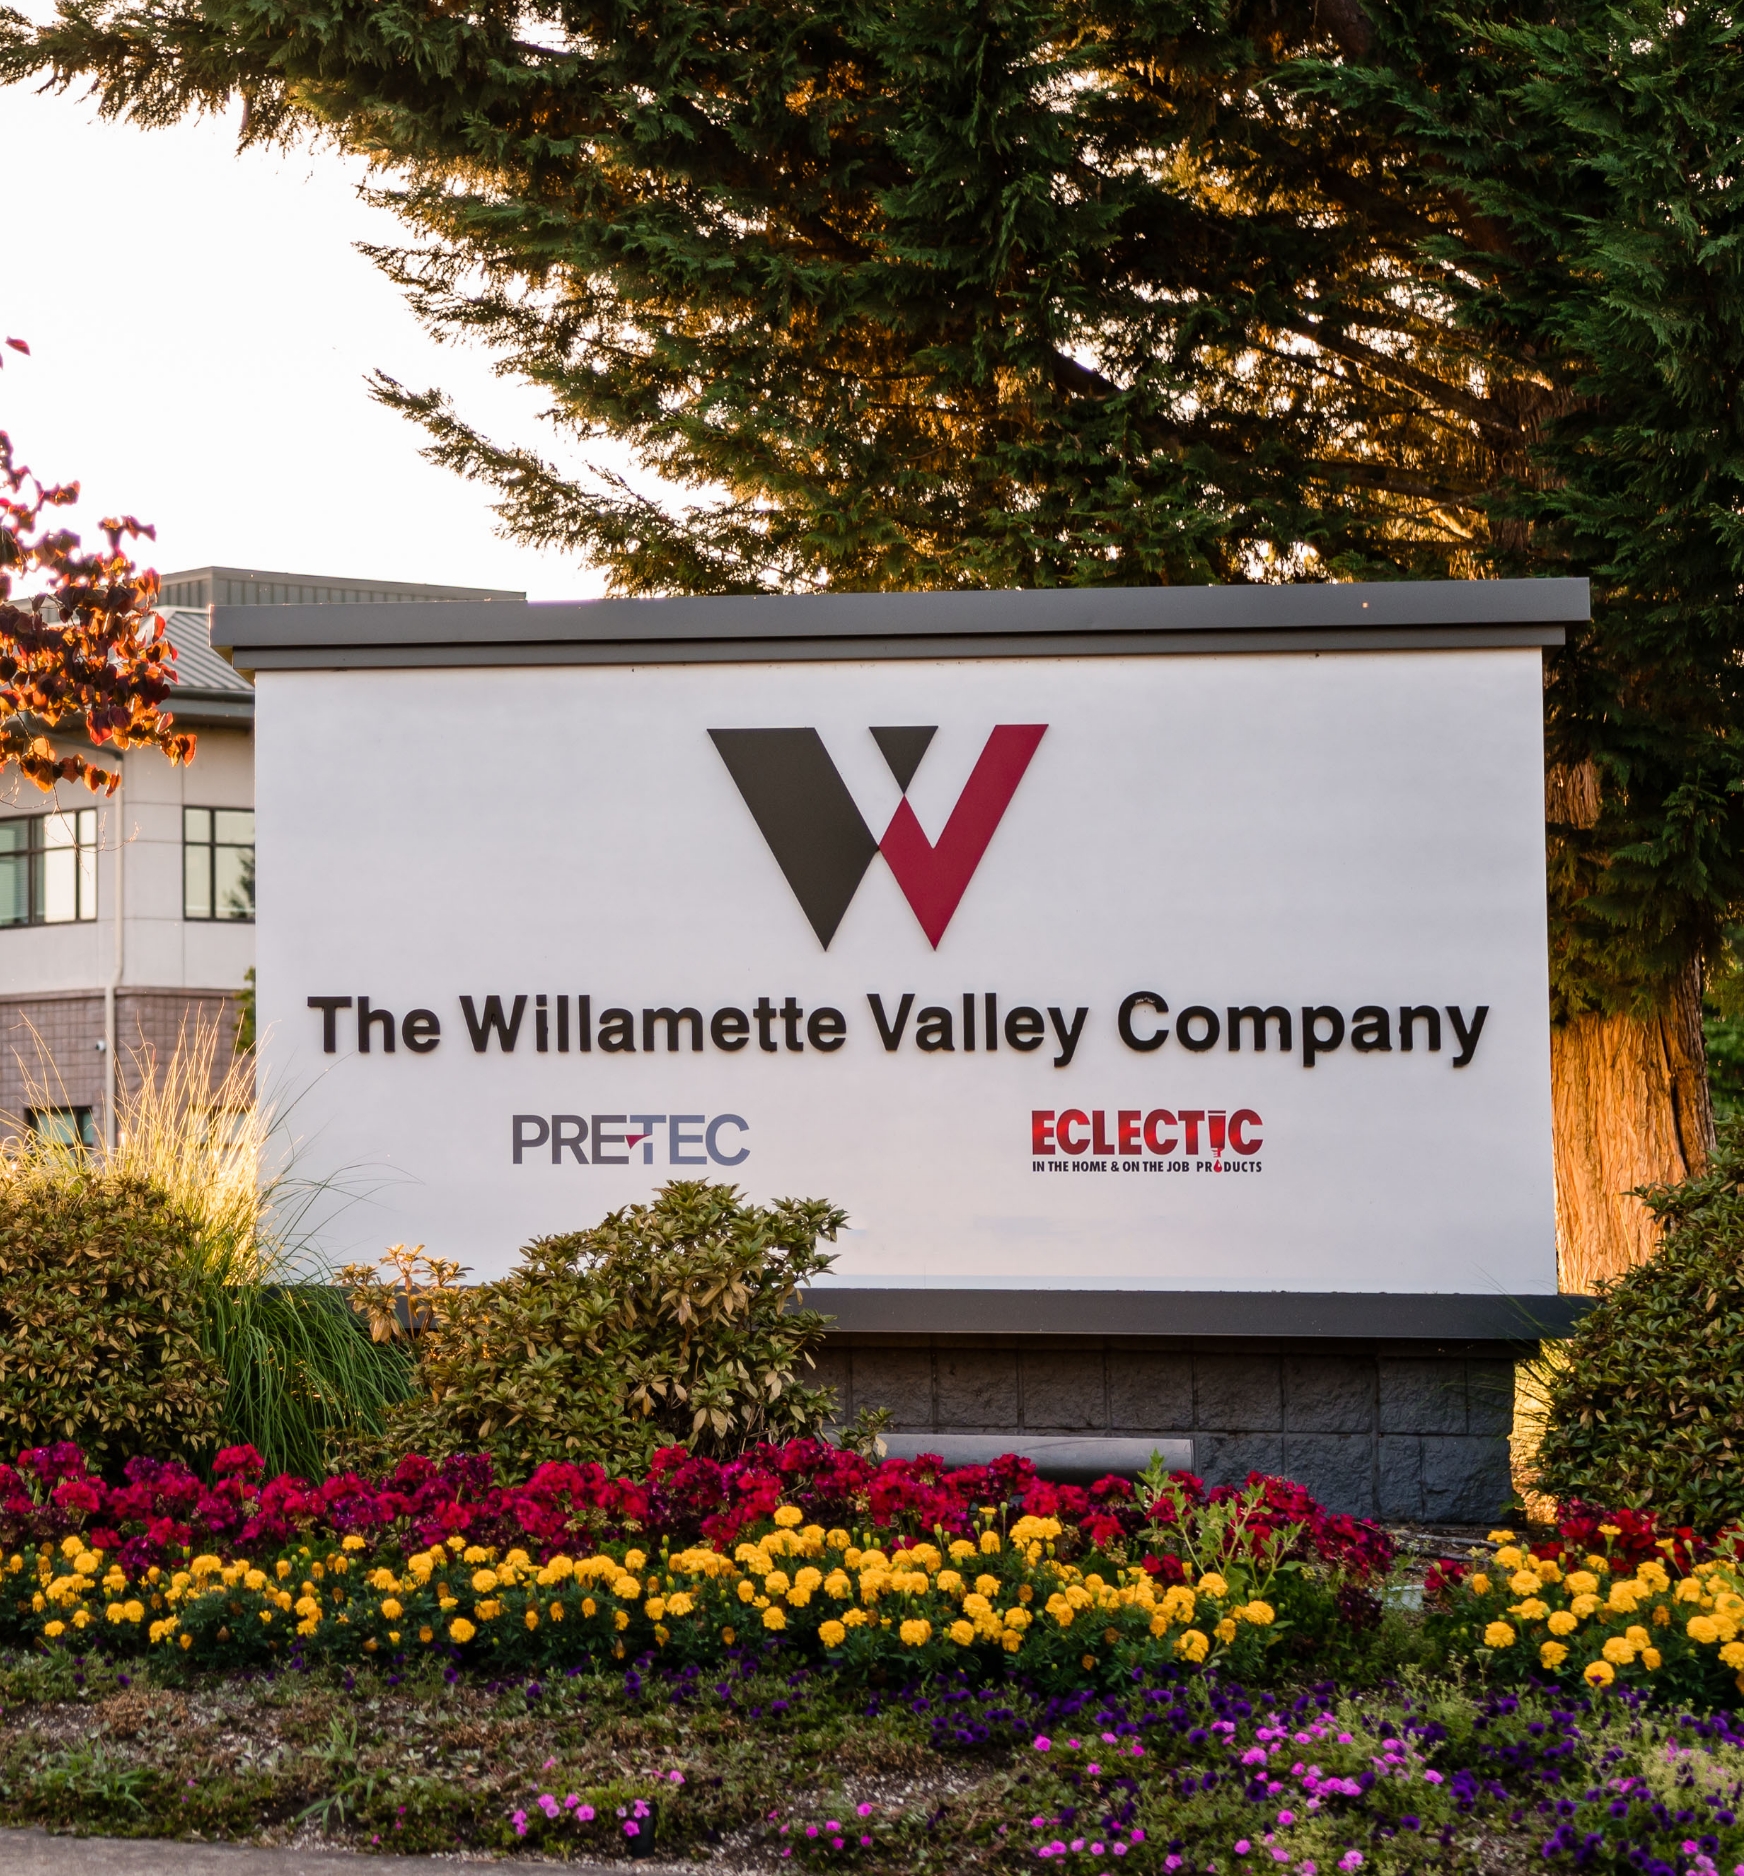 The Willamette Valley Company